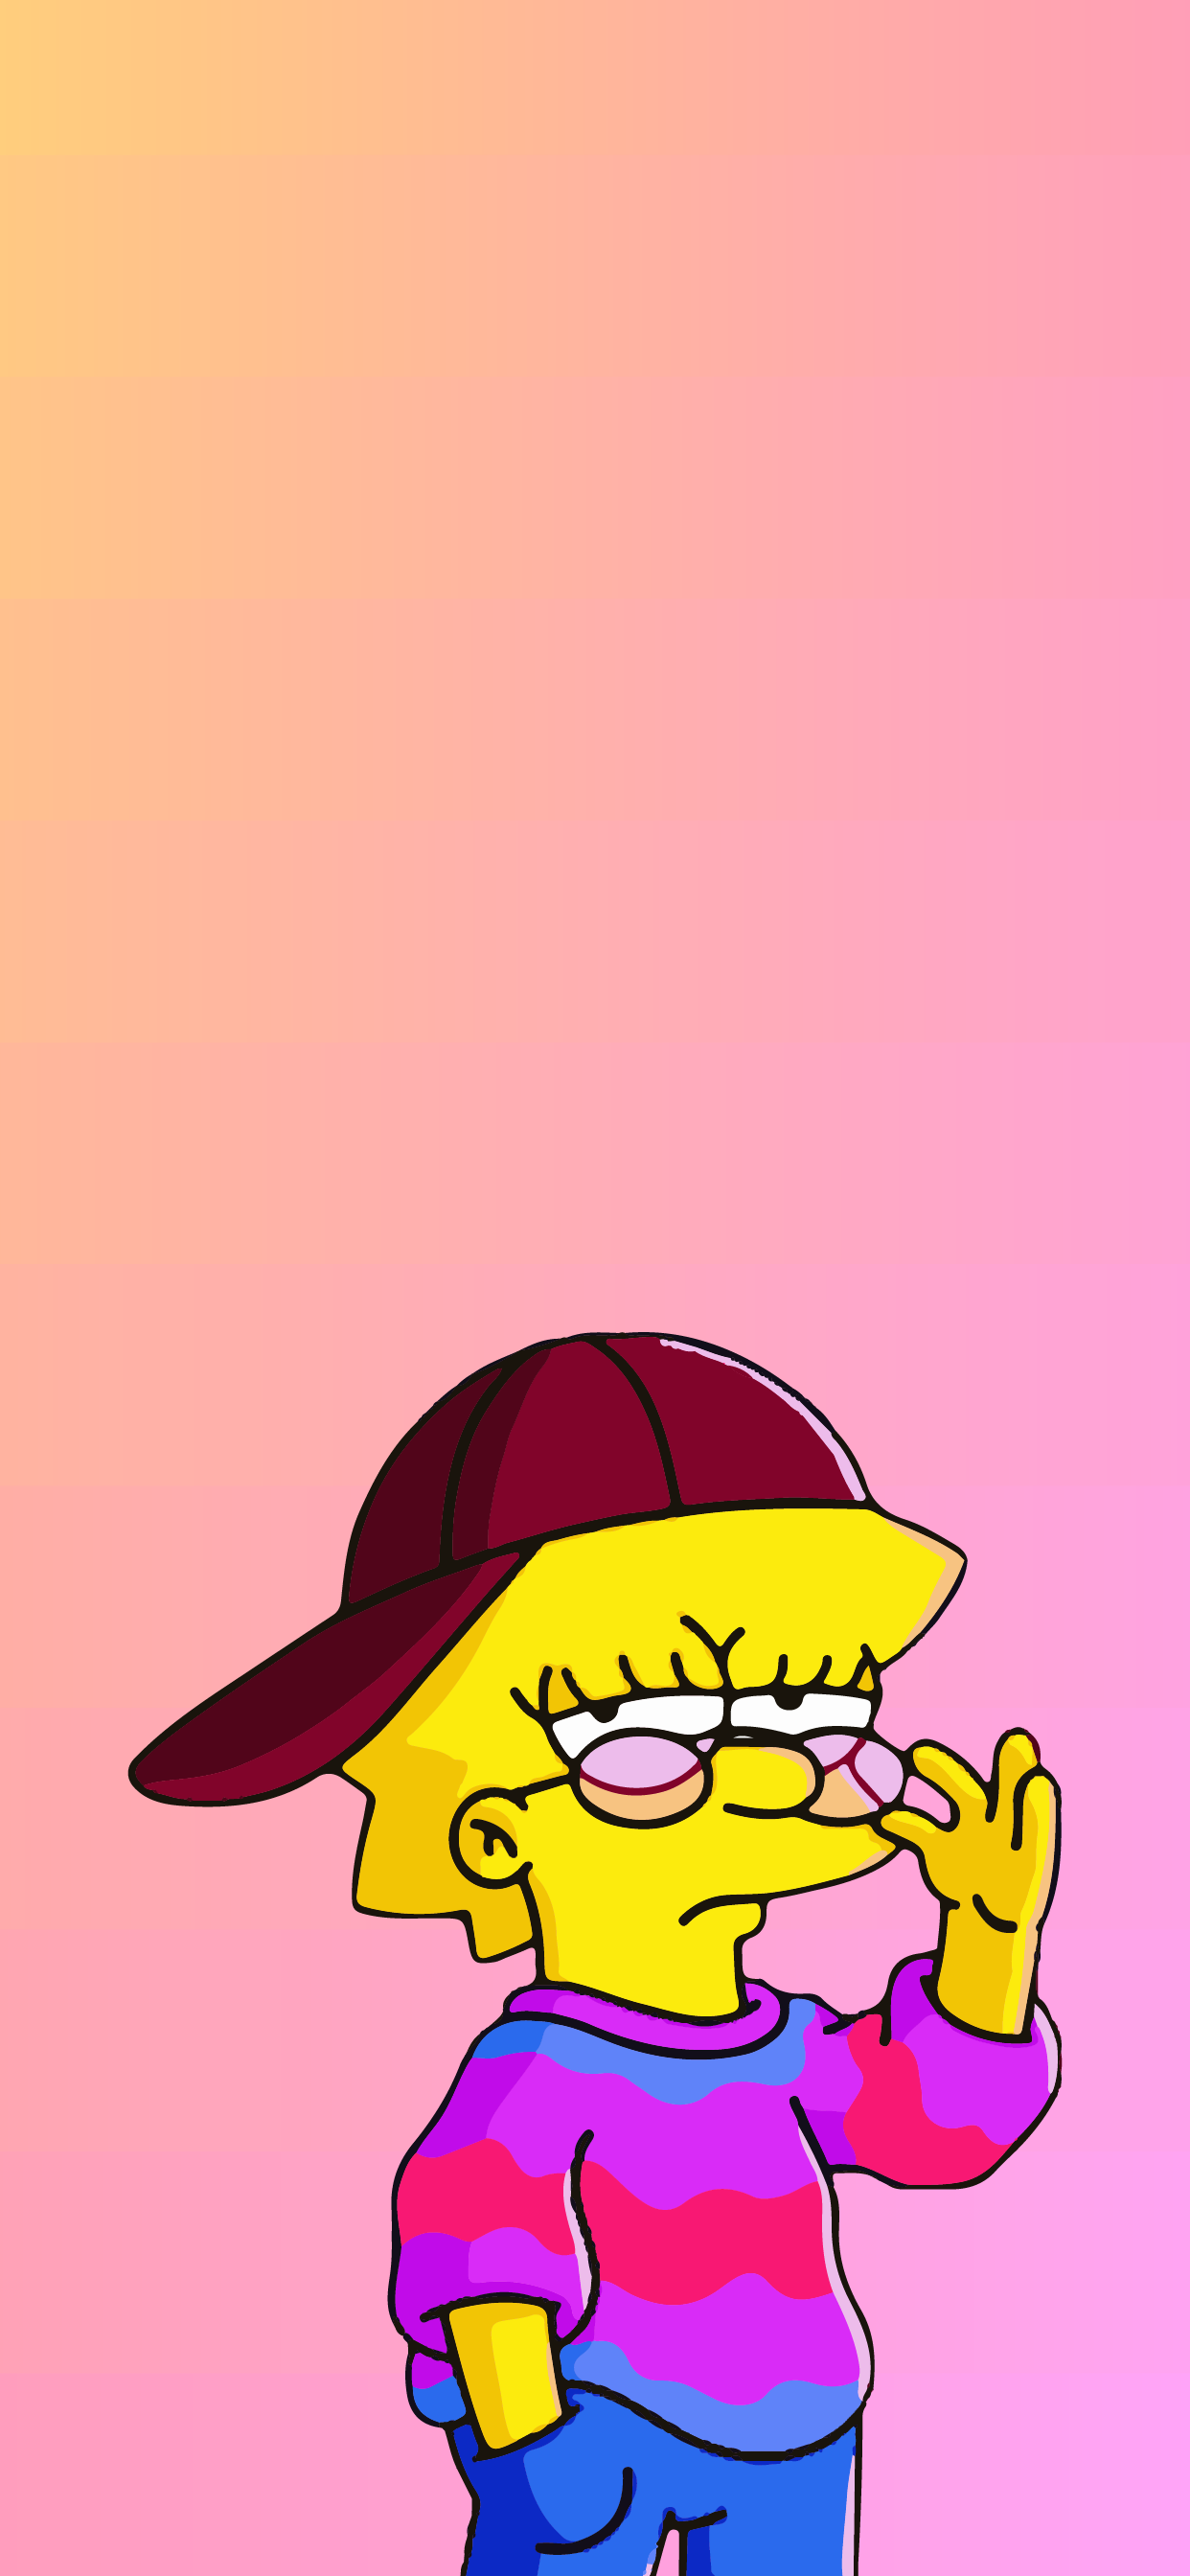 Download Wallpaper Aesthetic Cartoon Characters Simpson